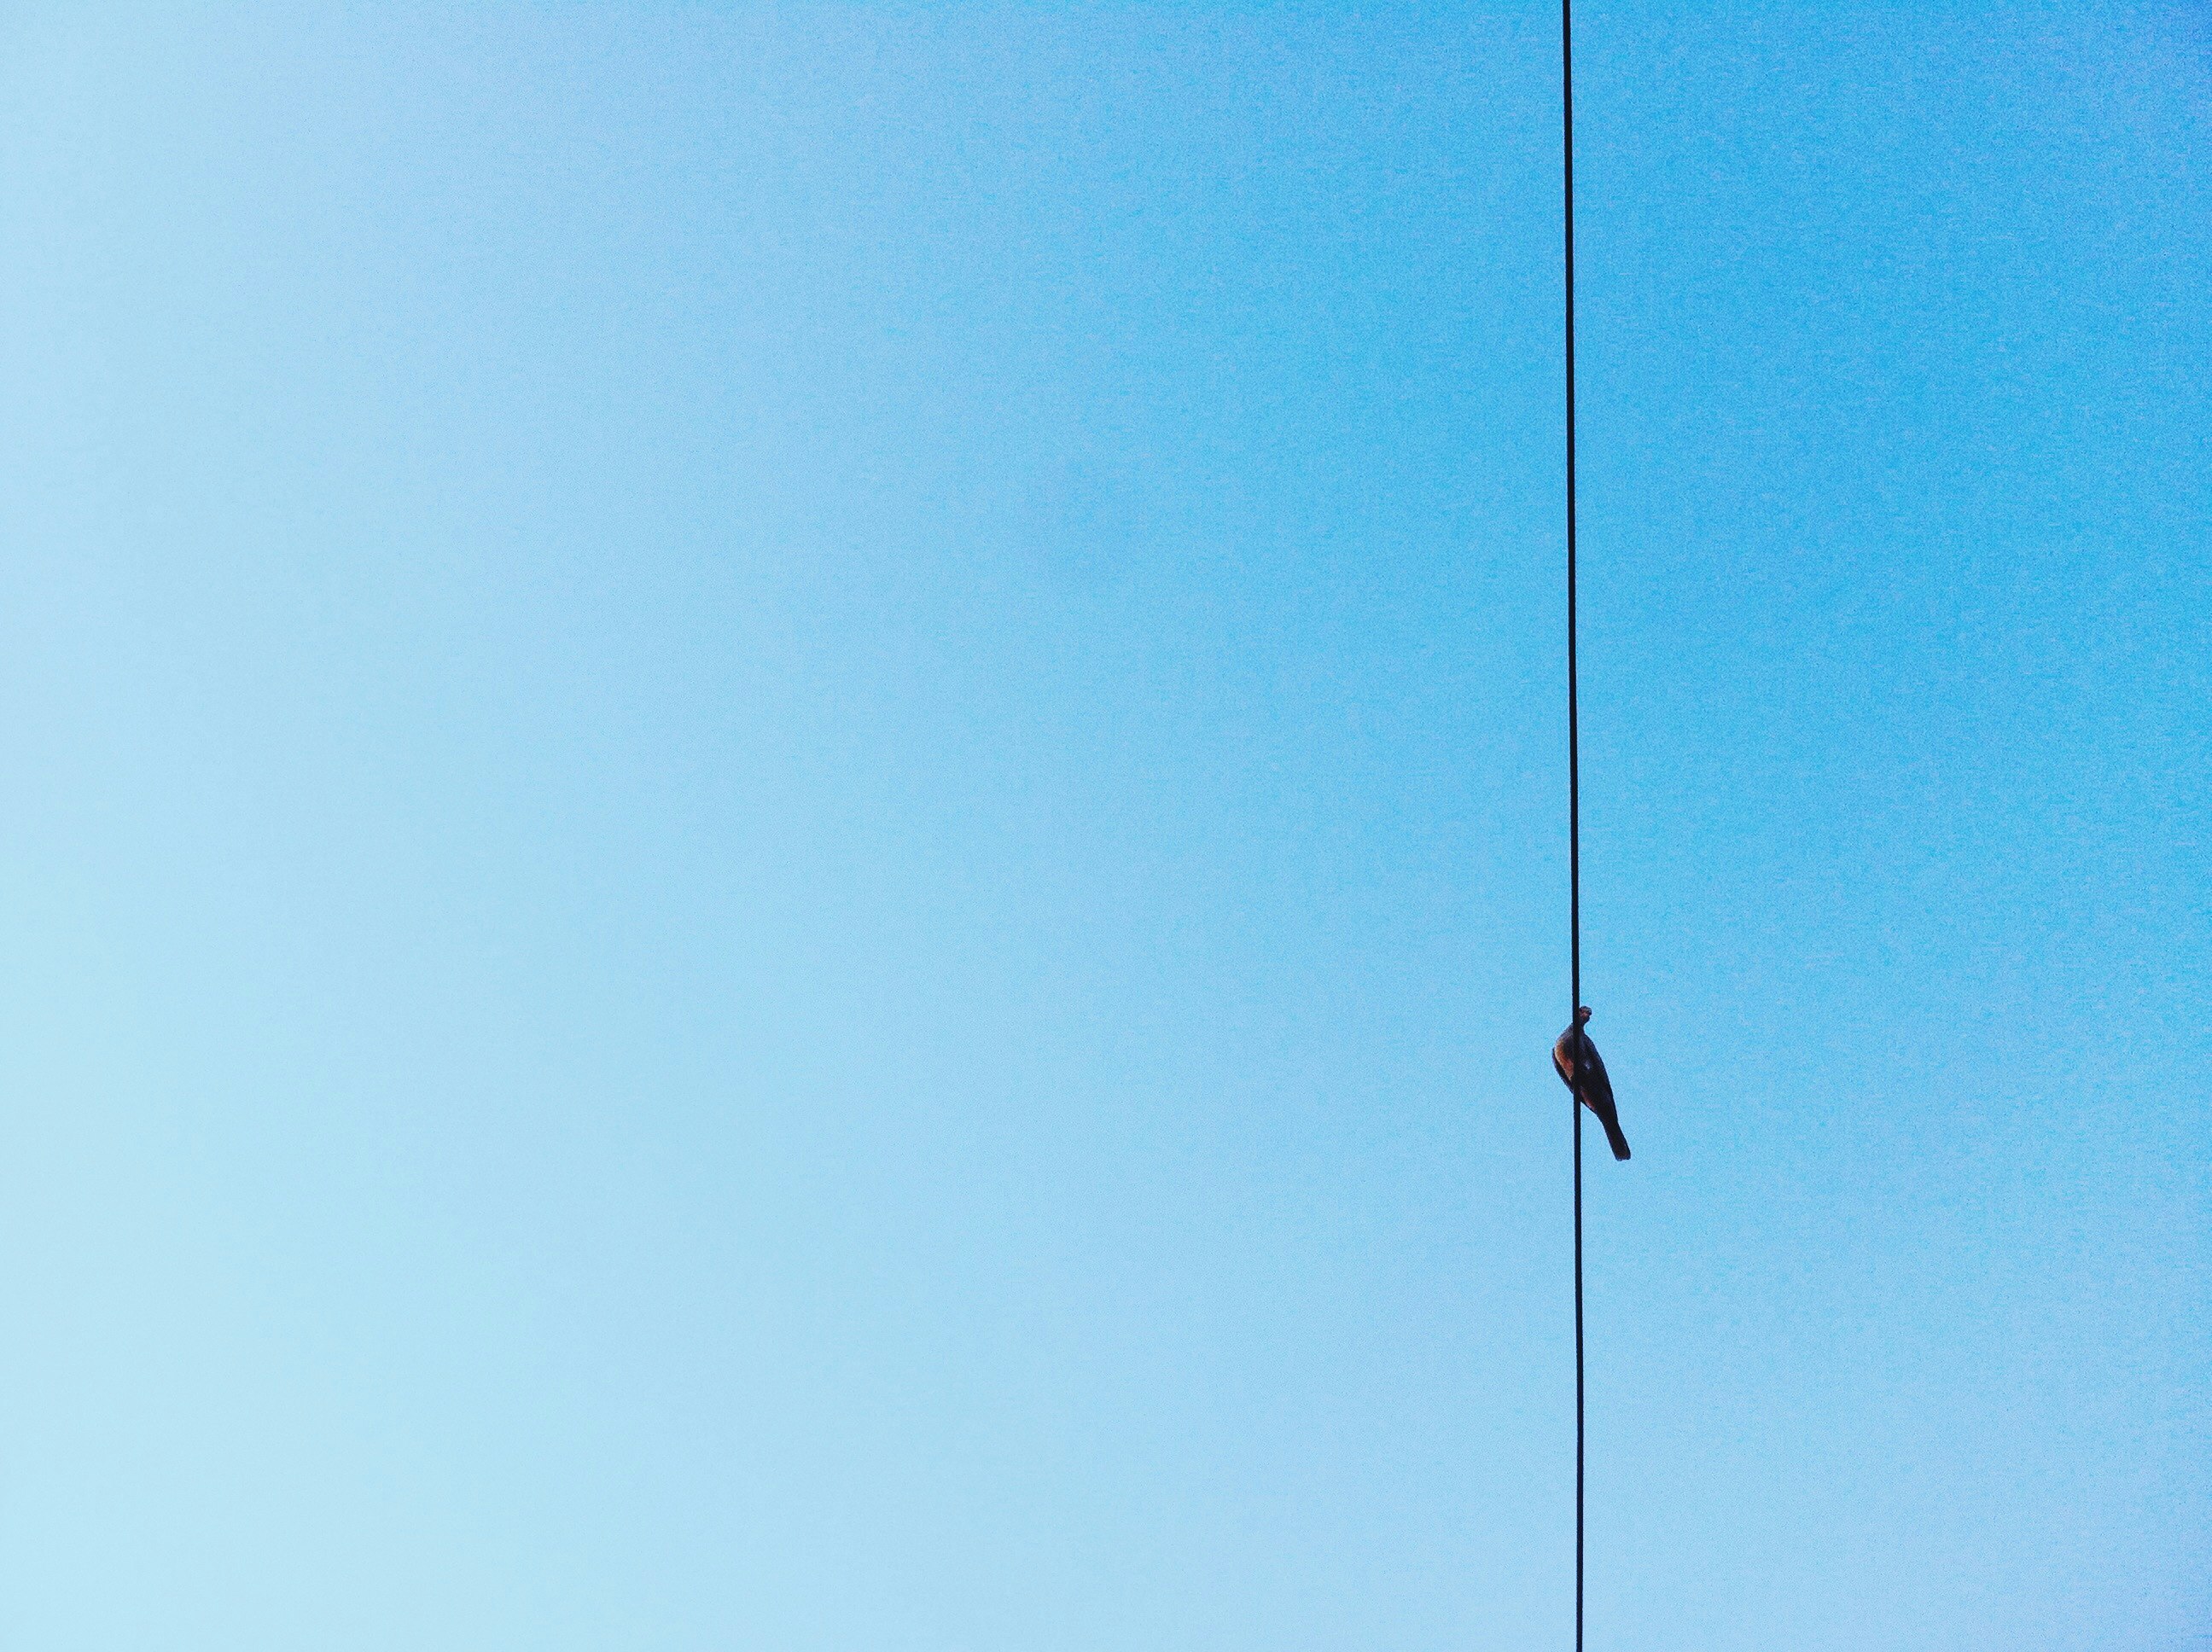 black bird on wire under clear sky